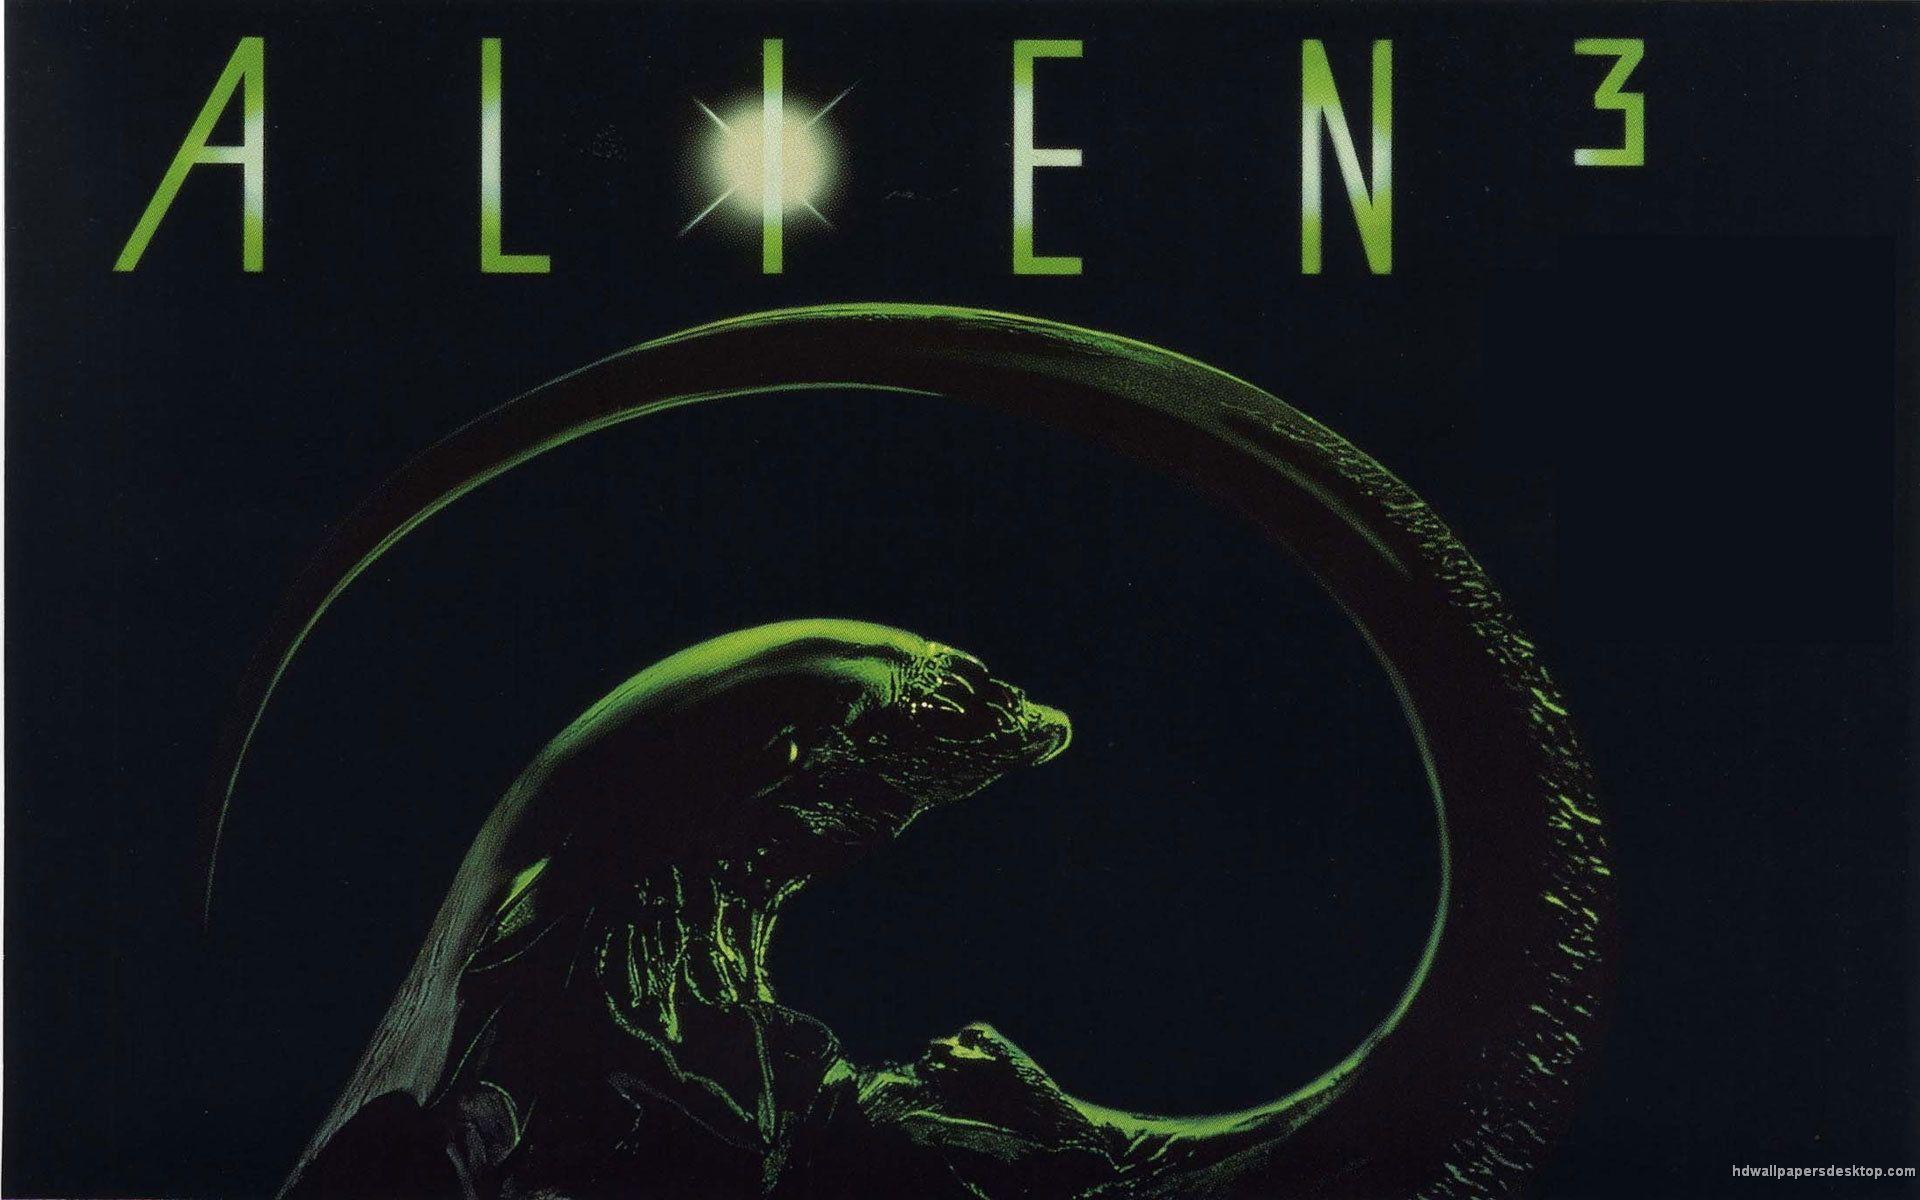 Alien 3 Logo - Bea's Ranting Reviews] Alien 3 [1992] by Bea Harper. The Super Network